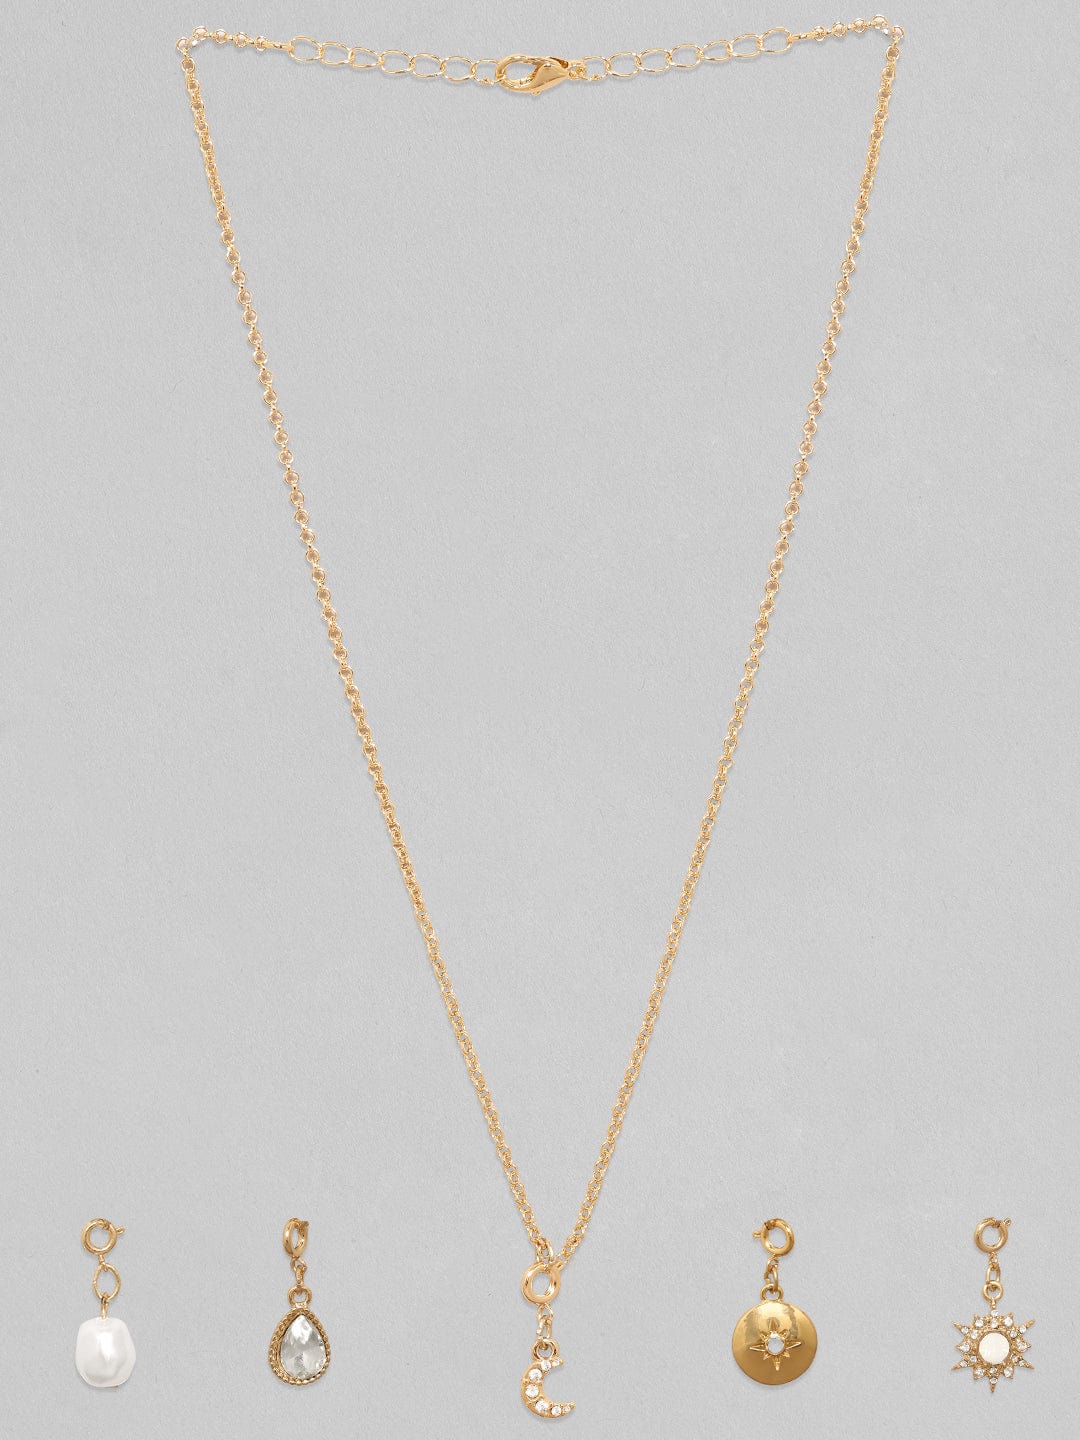 18K Gold Plated Kids Charms Family Necklace w Chain Boys n Girls Oro  Laminado | eBay